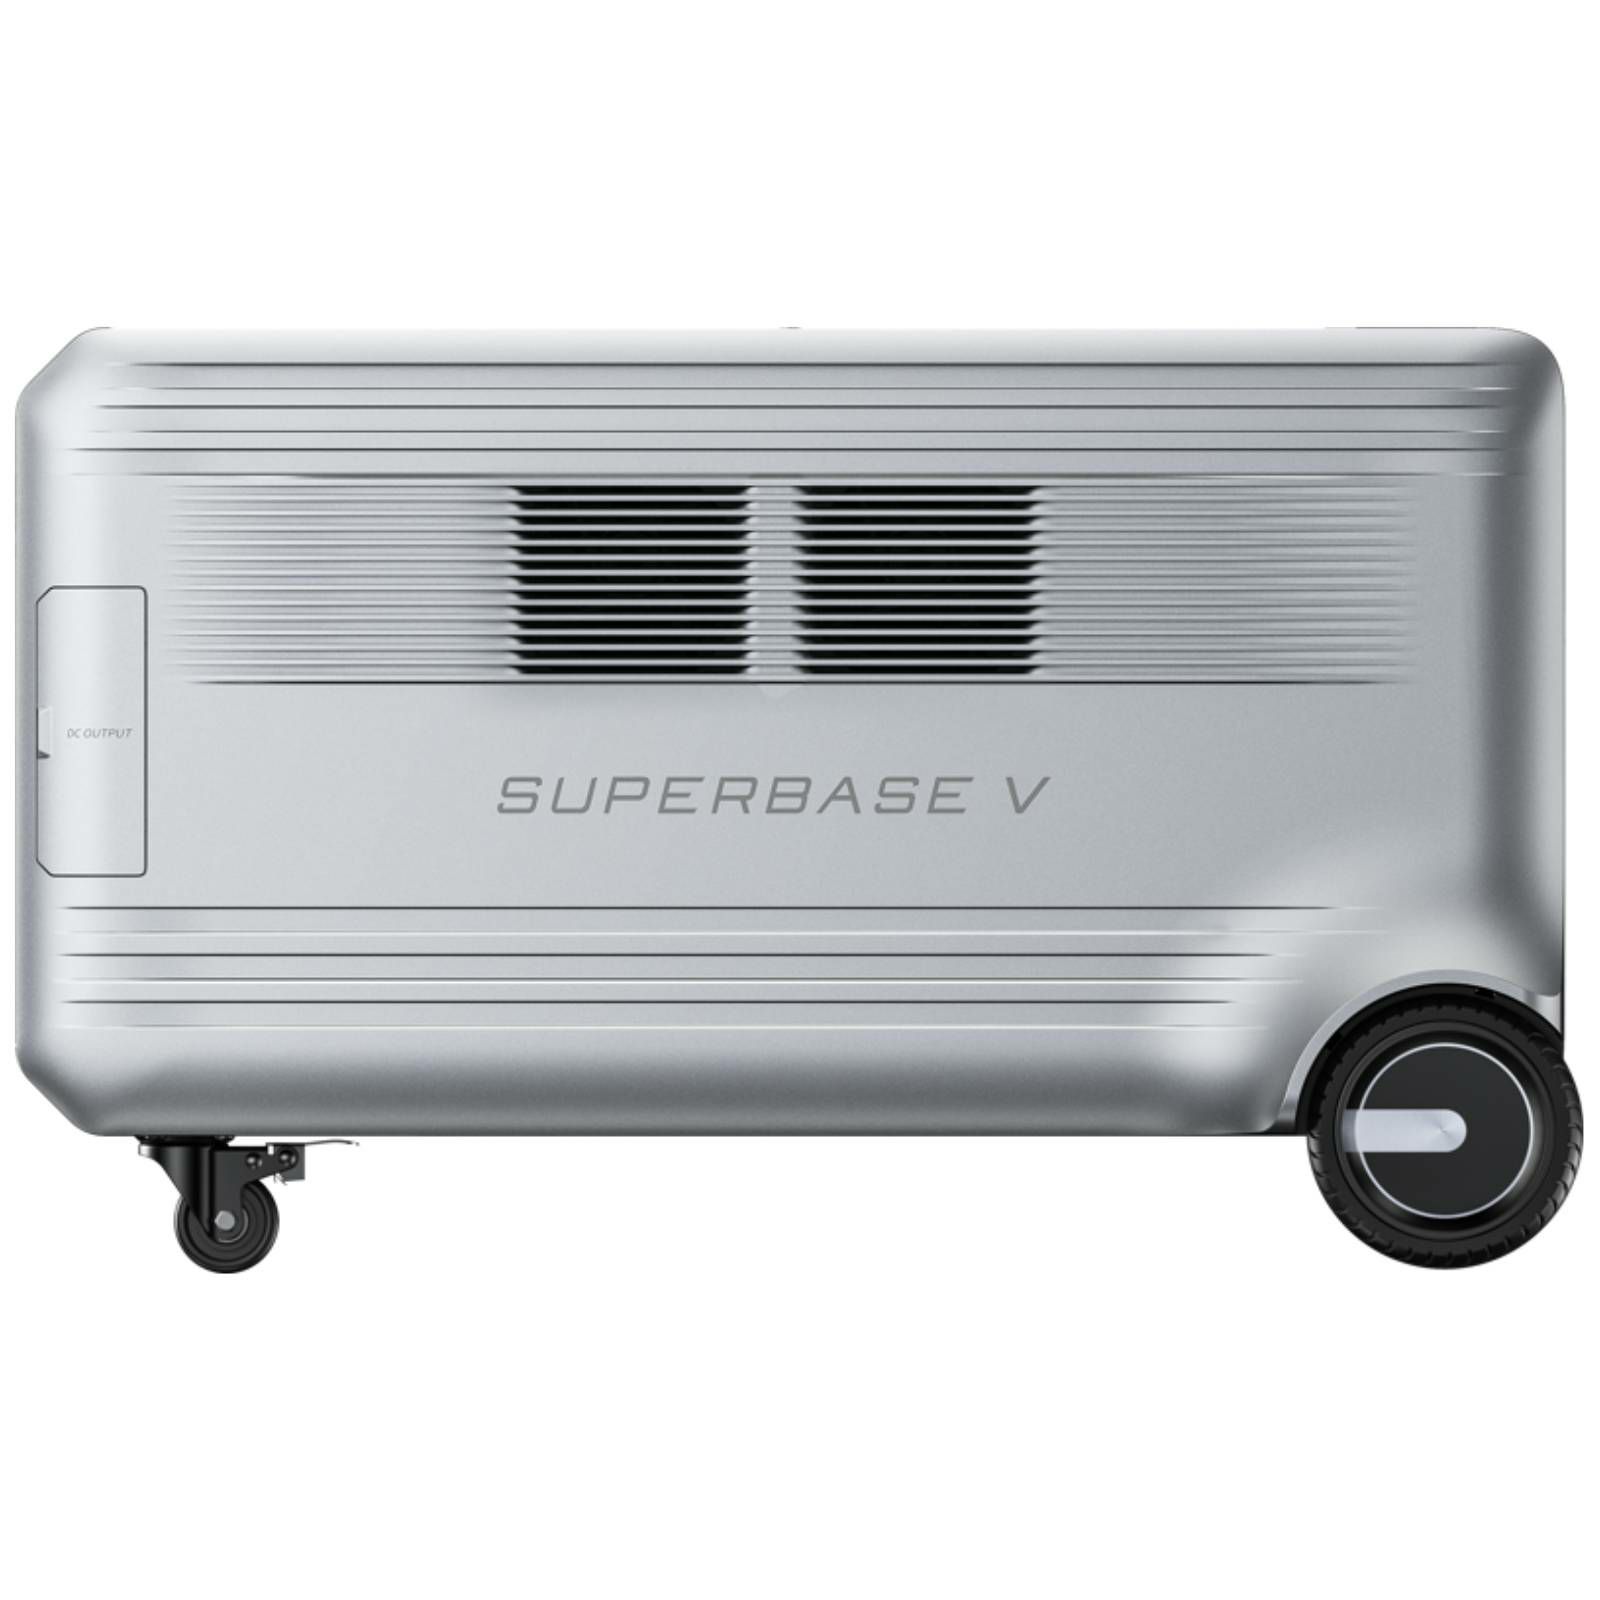 Zendure Superbase V6400